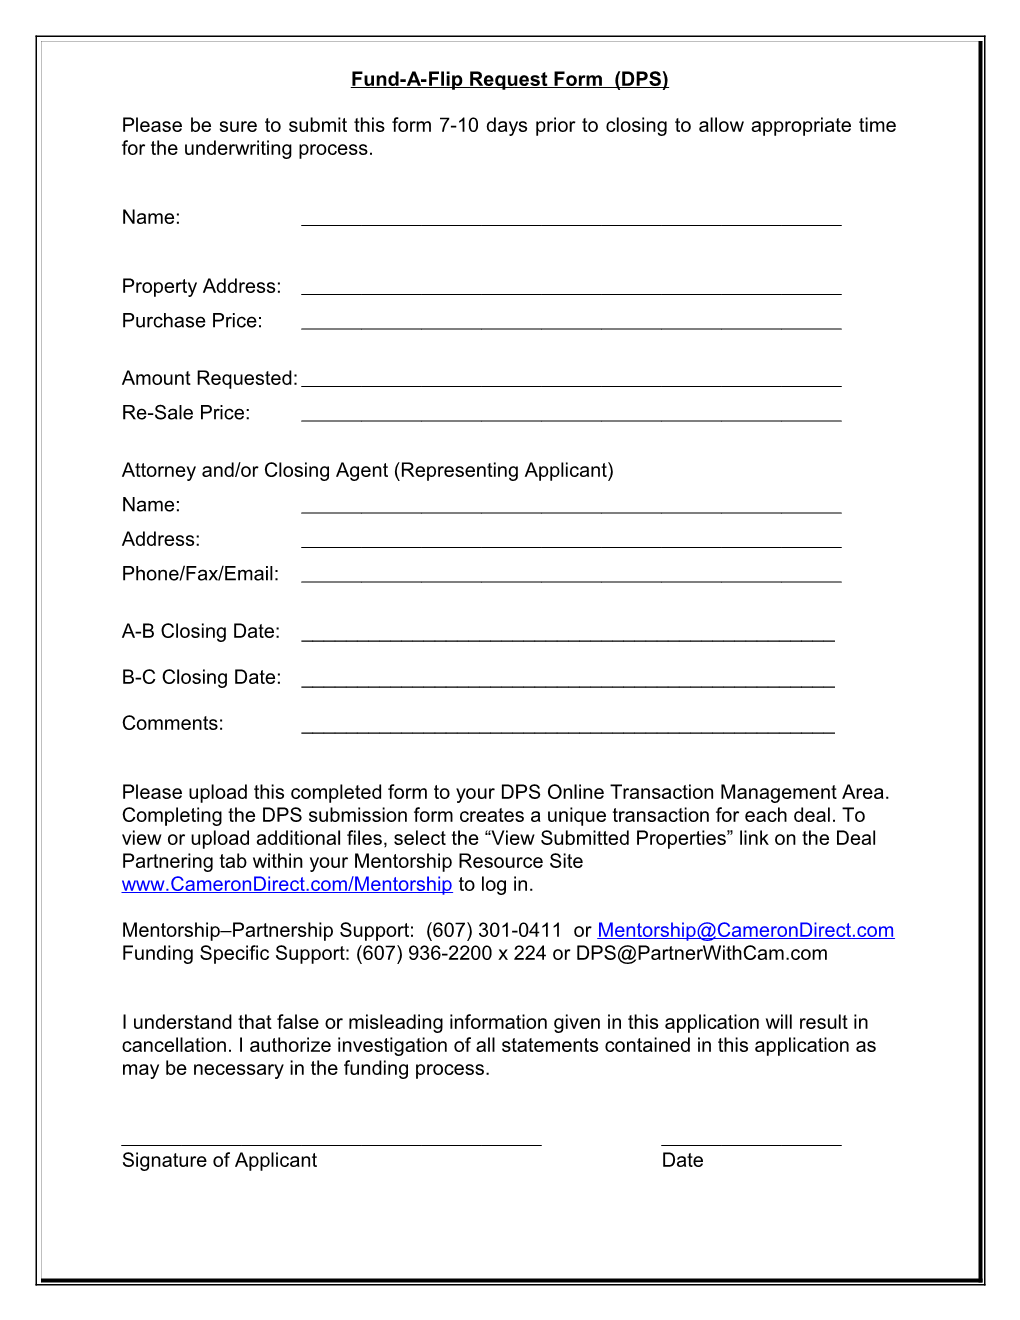 Fund-A-Flip Request Form (DPS)